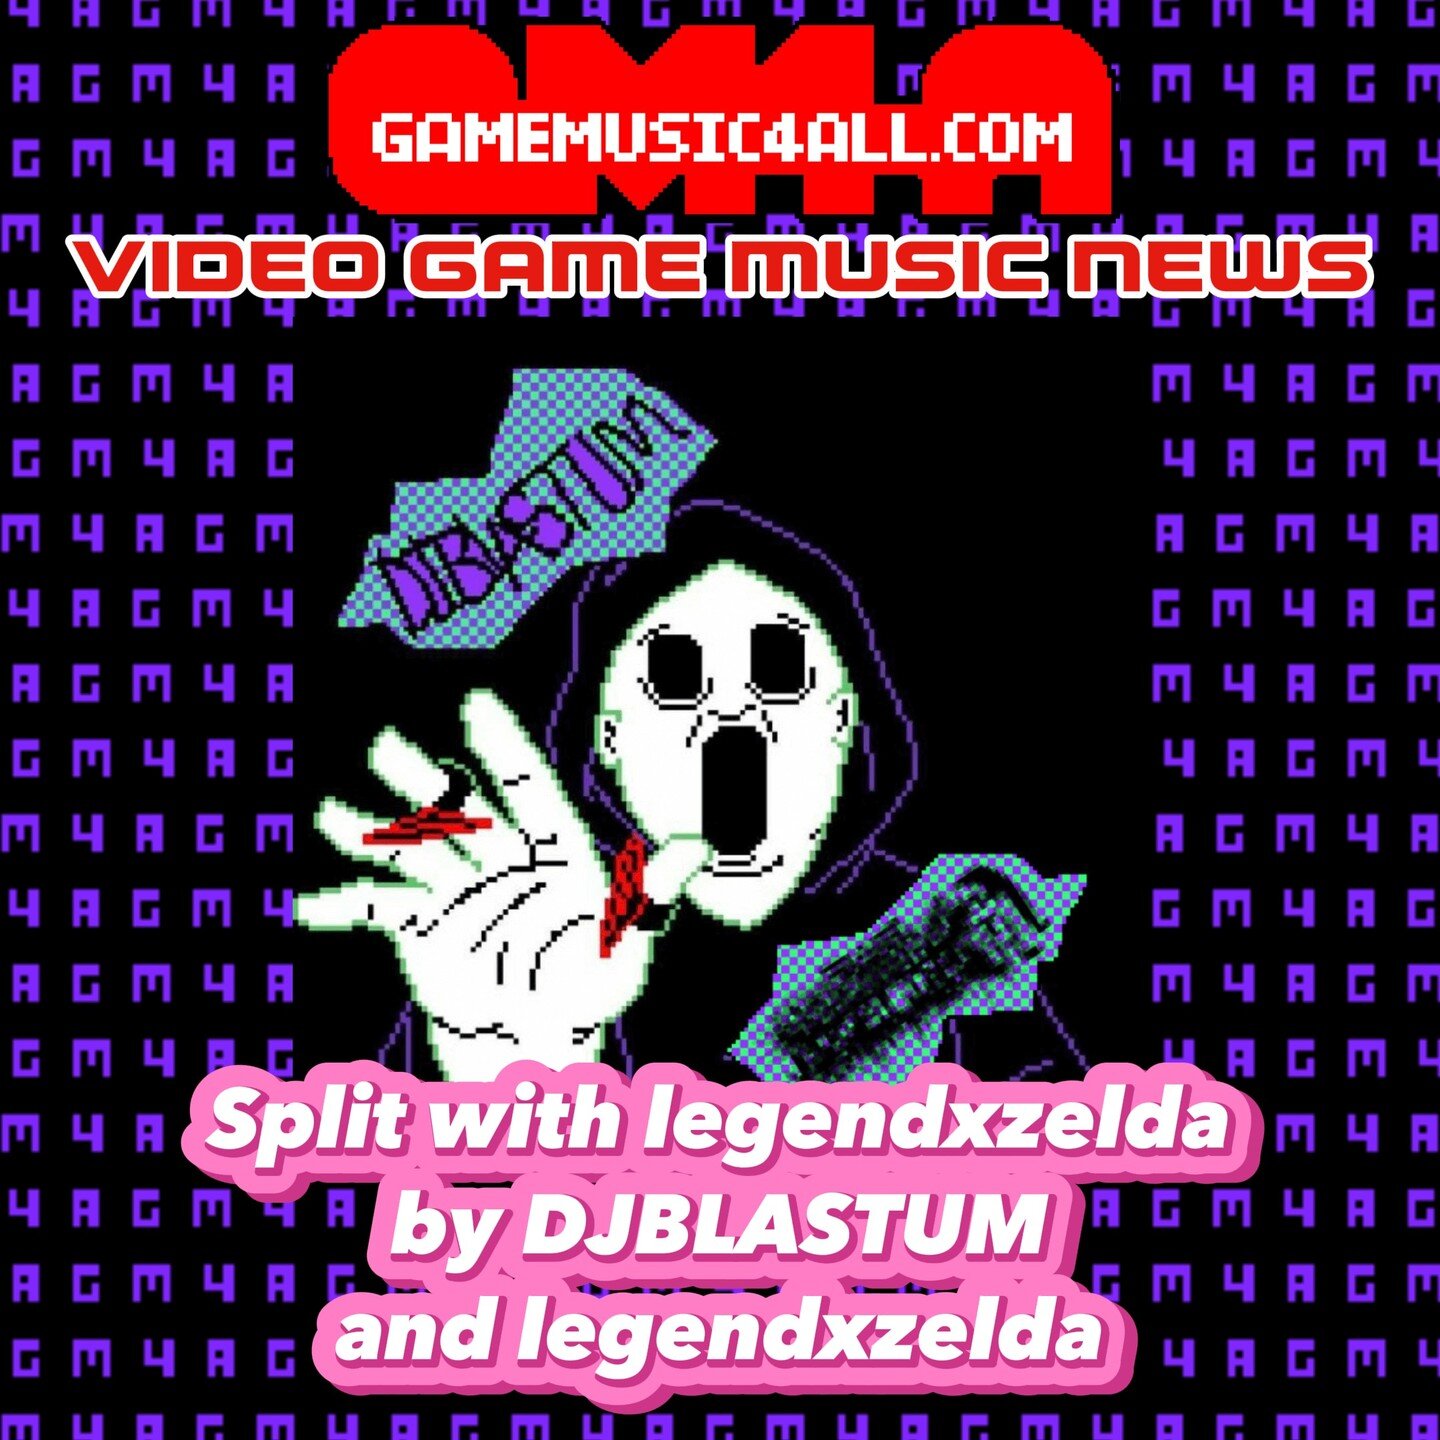 New Music! Split EP with legendxzelda by DJBLASTUM and legendxzelda Link in bio or go to gamemusic4all.com/vgmnews
Download at: djblastum.bandcamp.com 
@djblastum @legend_x_zelda_ 

#gamemusic #videogamemusic #vgm #chiptune #pomona #upland #psp #grin